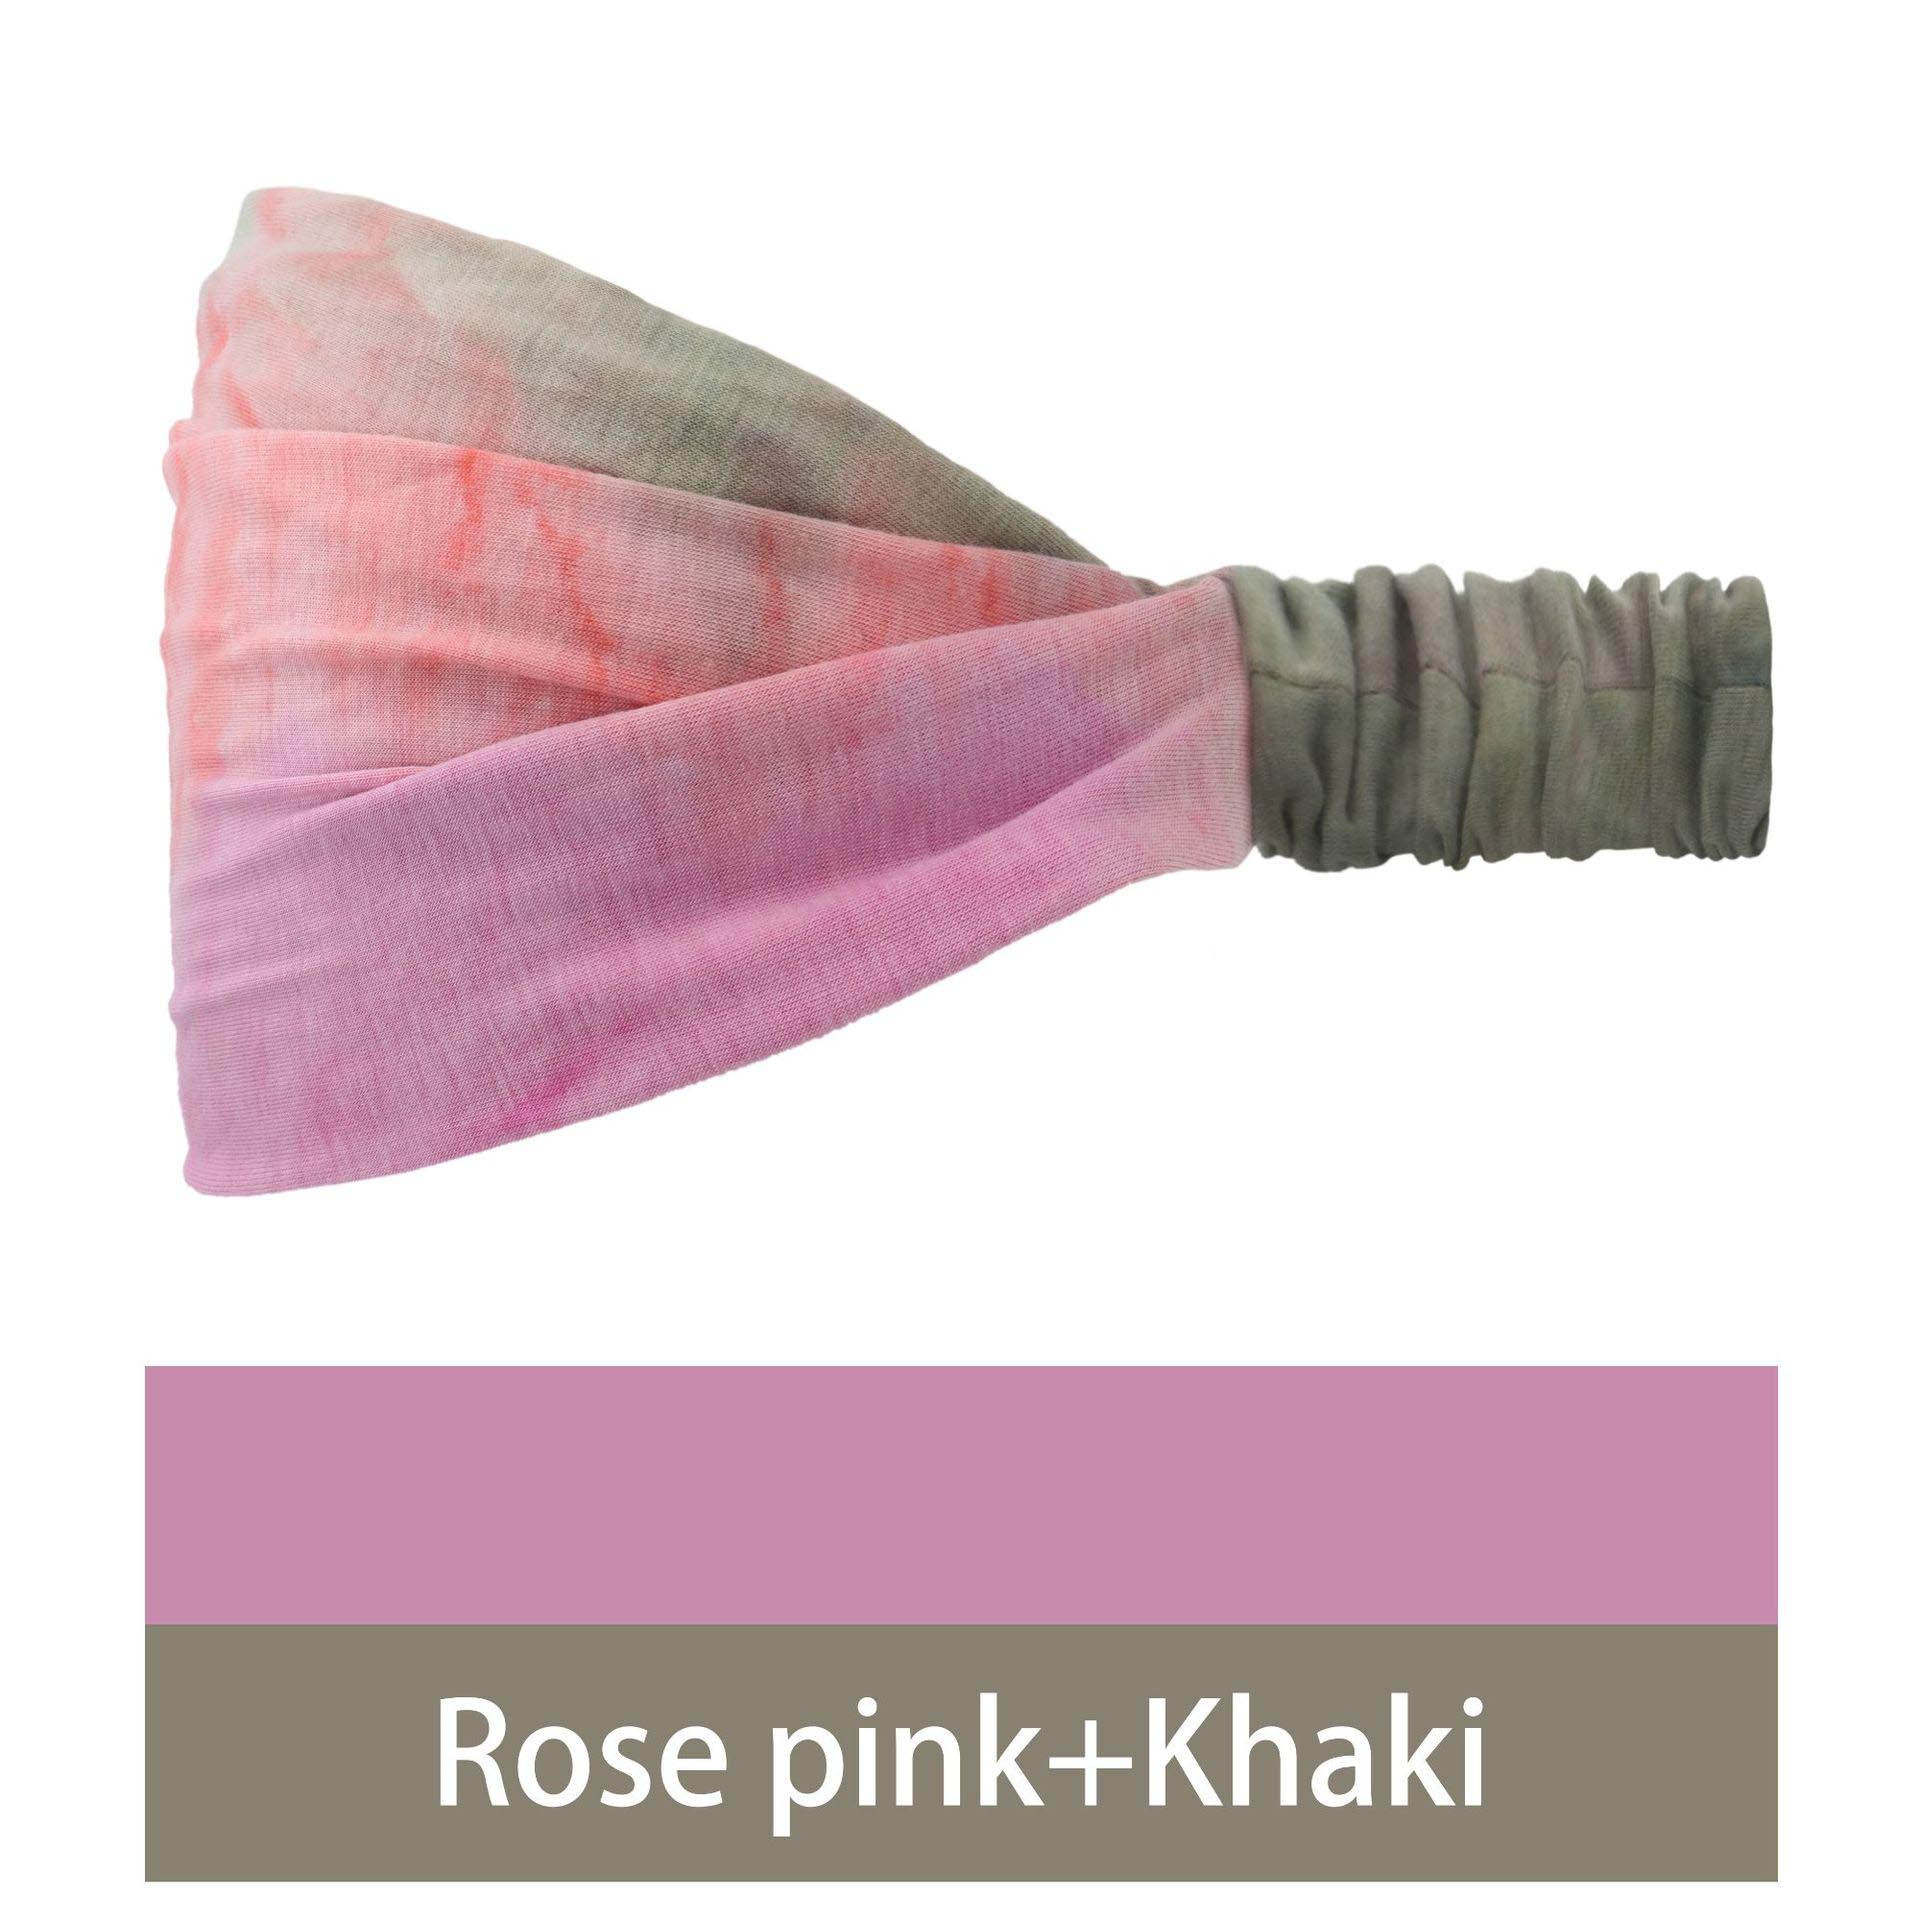 Rose pink and khaki